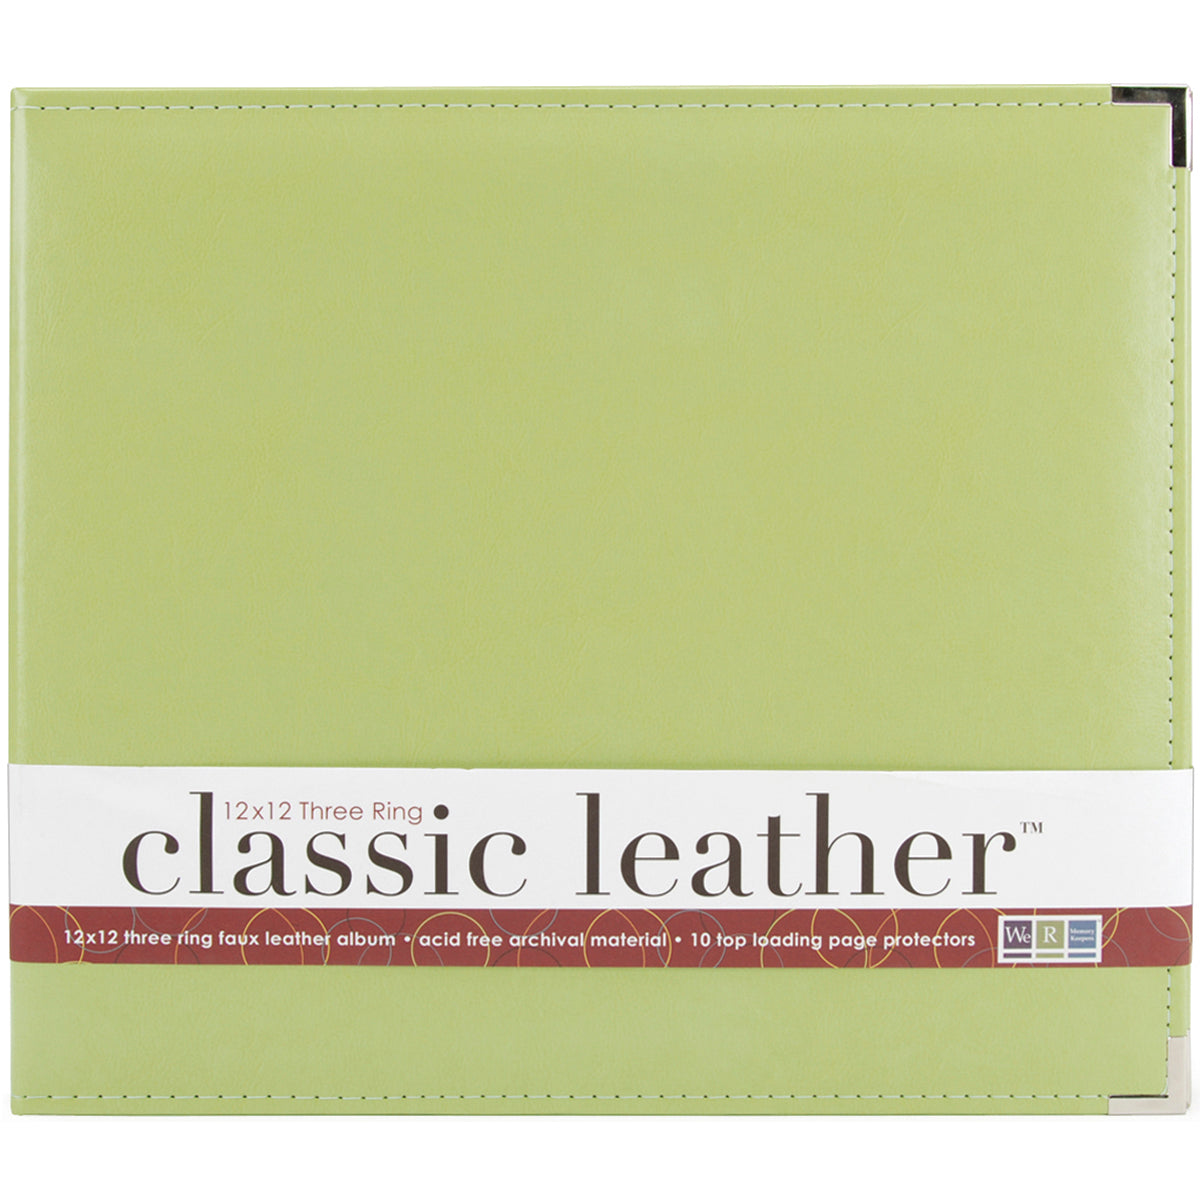 We R Classic Leather D-Ring Album 12X12-22 colors - 633356302230